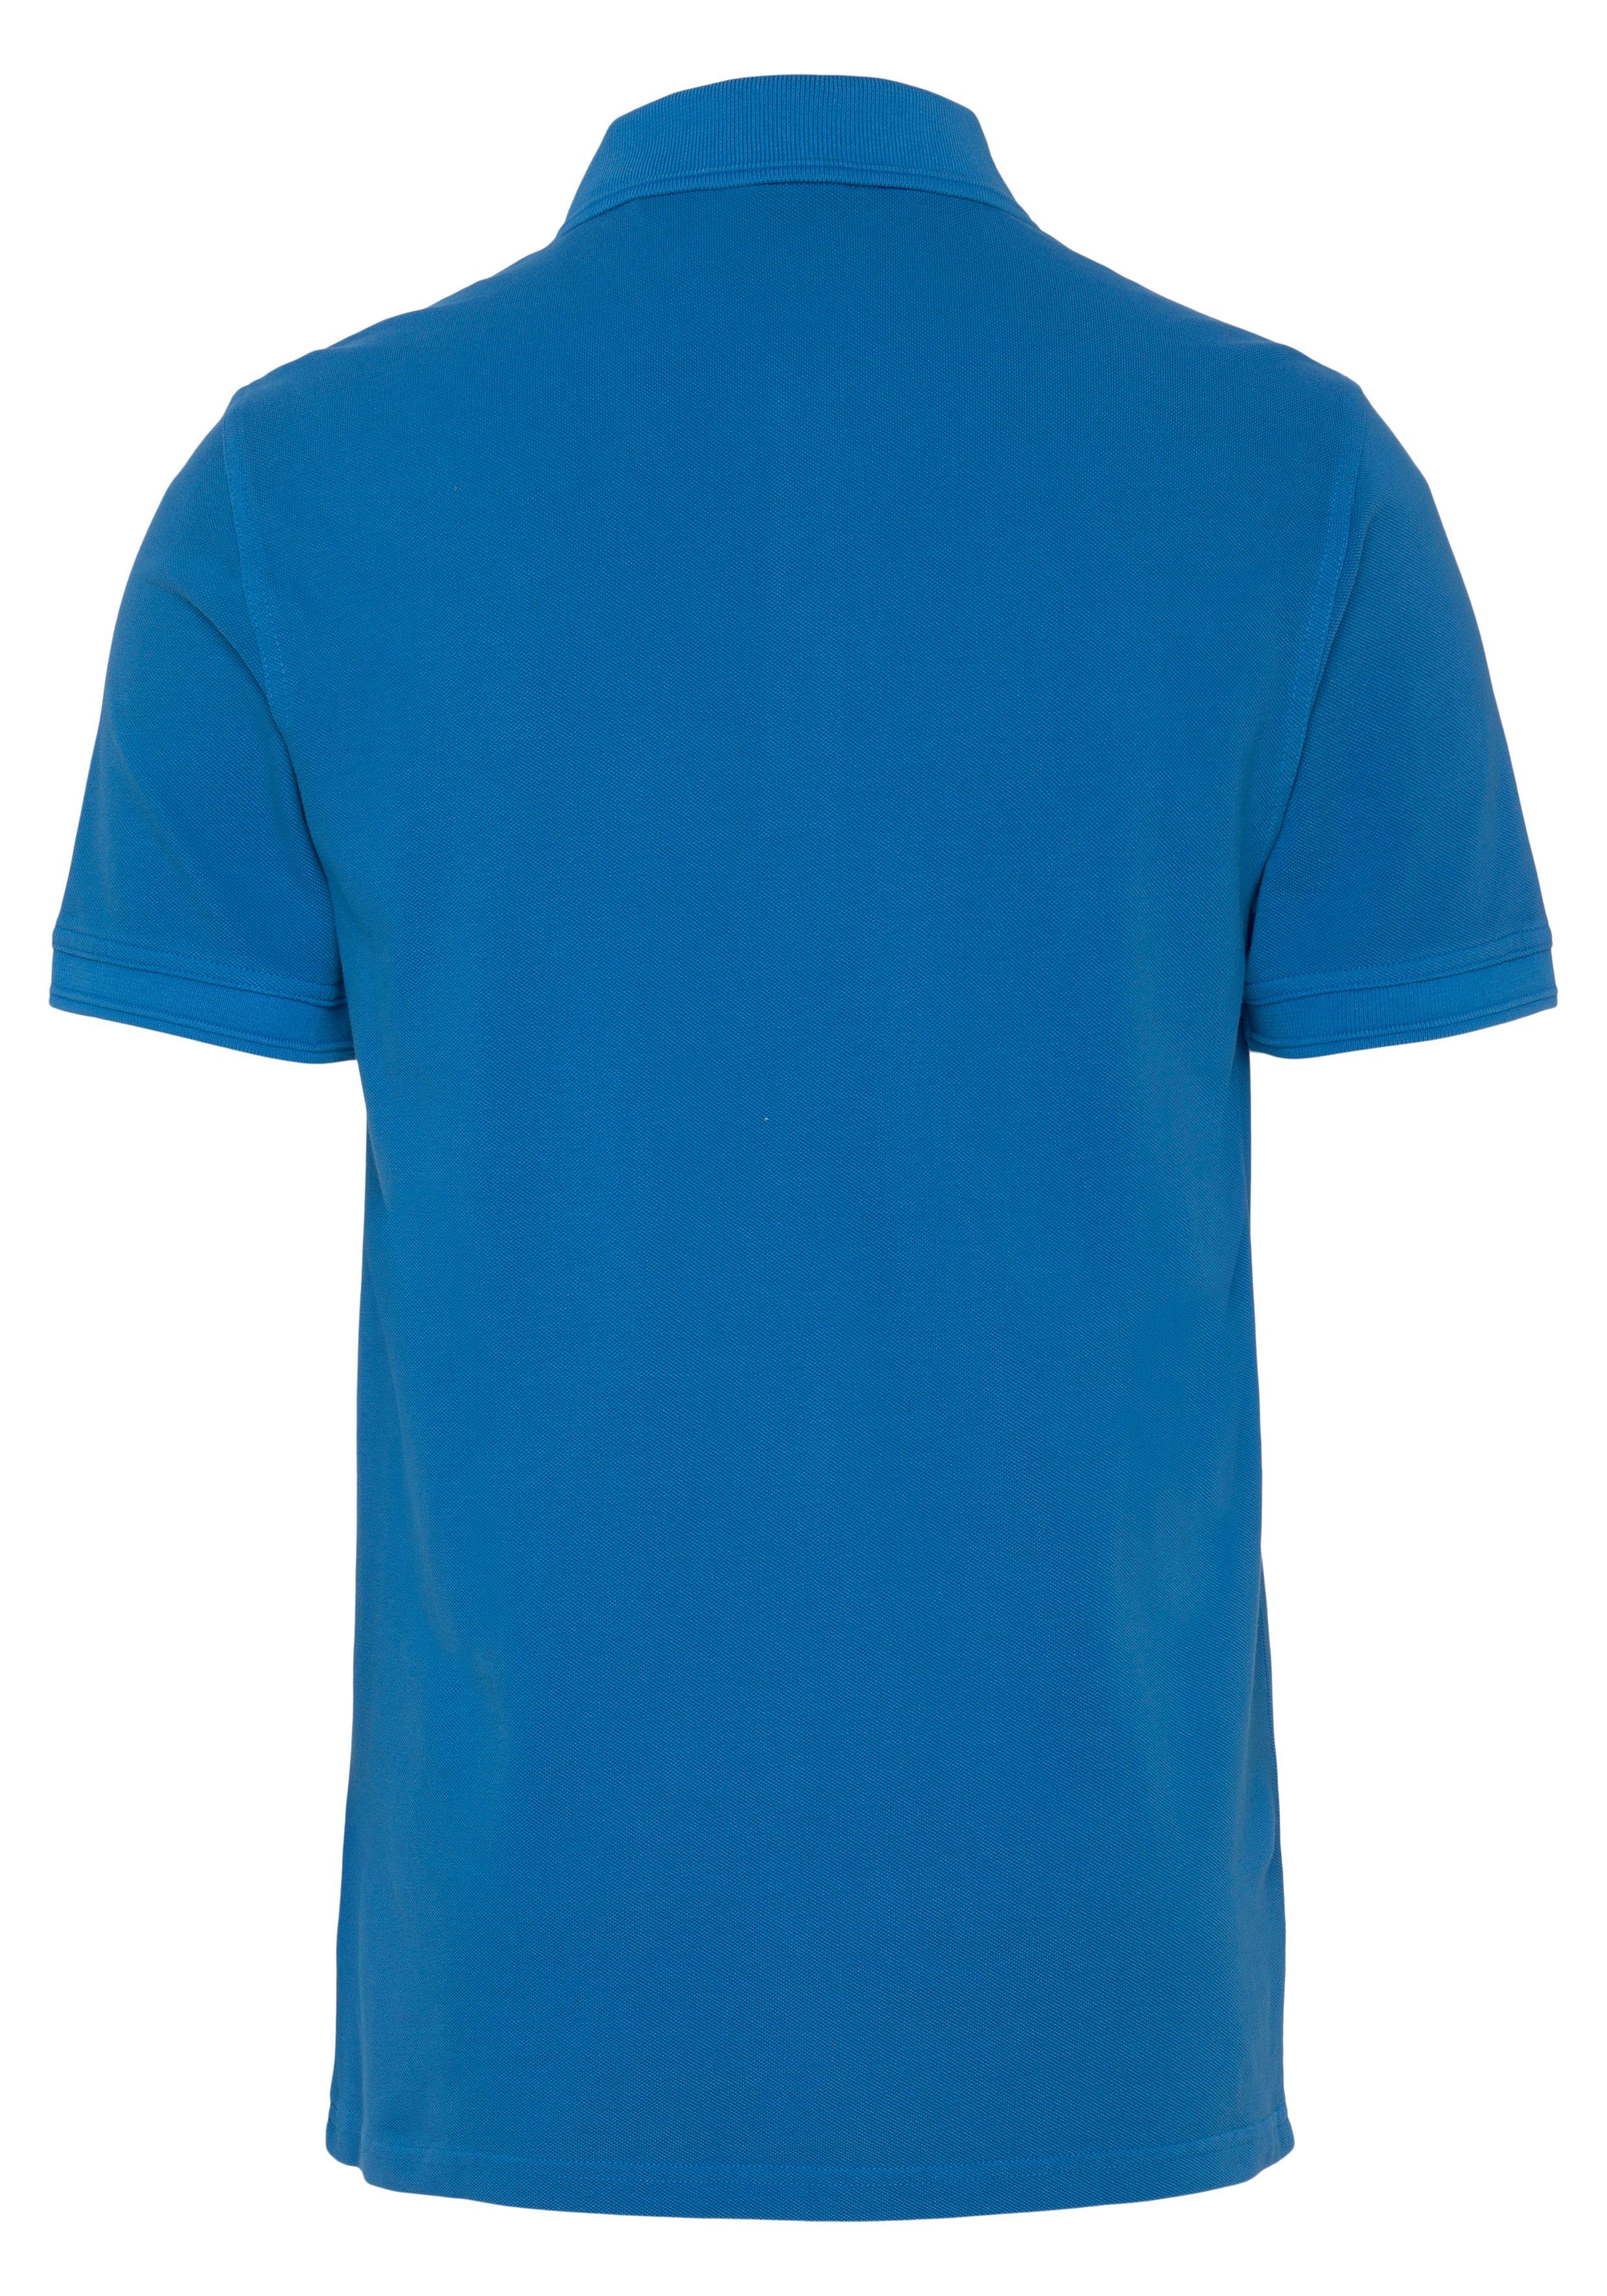 BOSS ORANGE Poloshirt Prime 01 mit Brust Logoschriftzug dezentem auf Open_Blue1 10203439 der